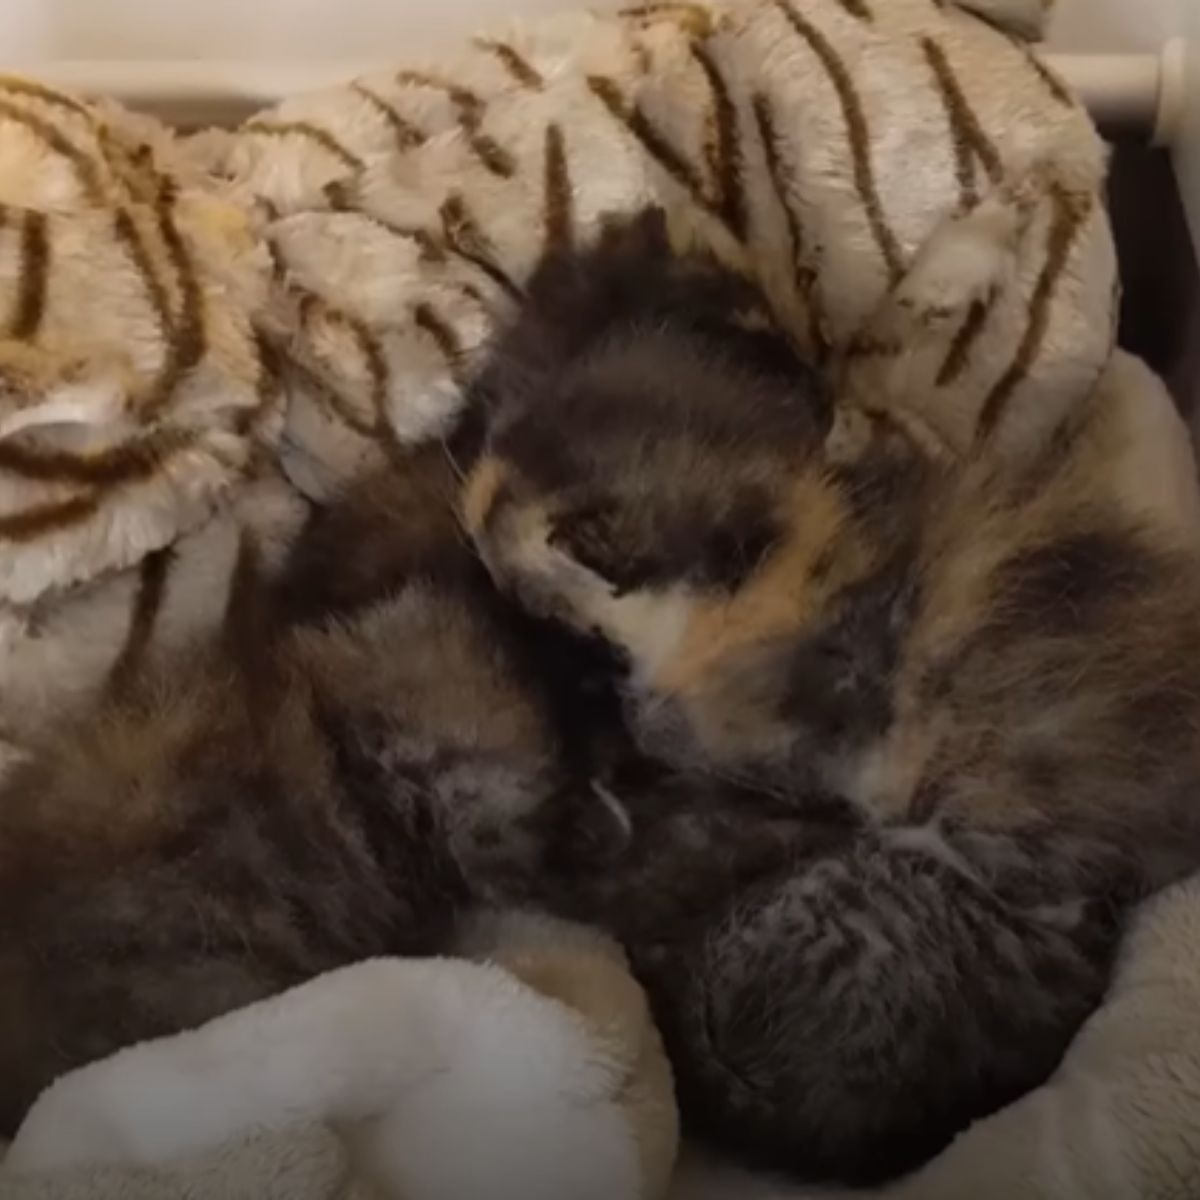 kittens sleeping on a blanket